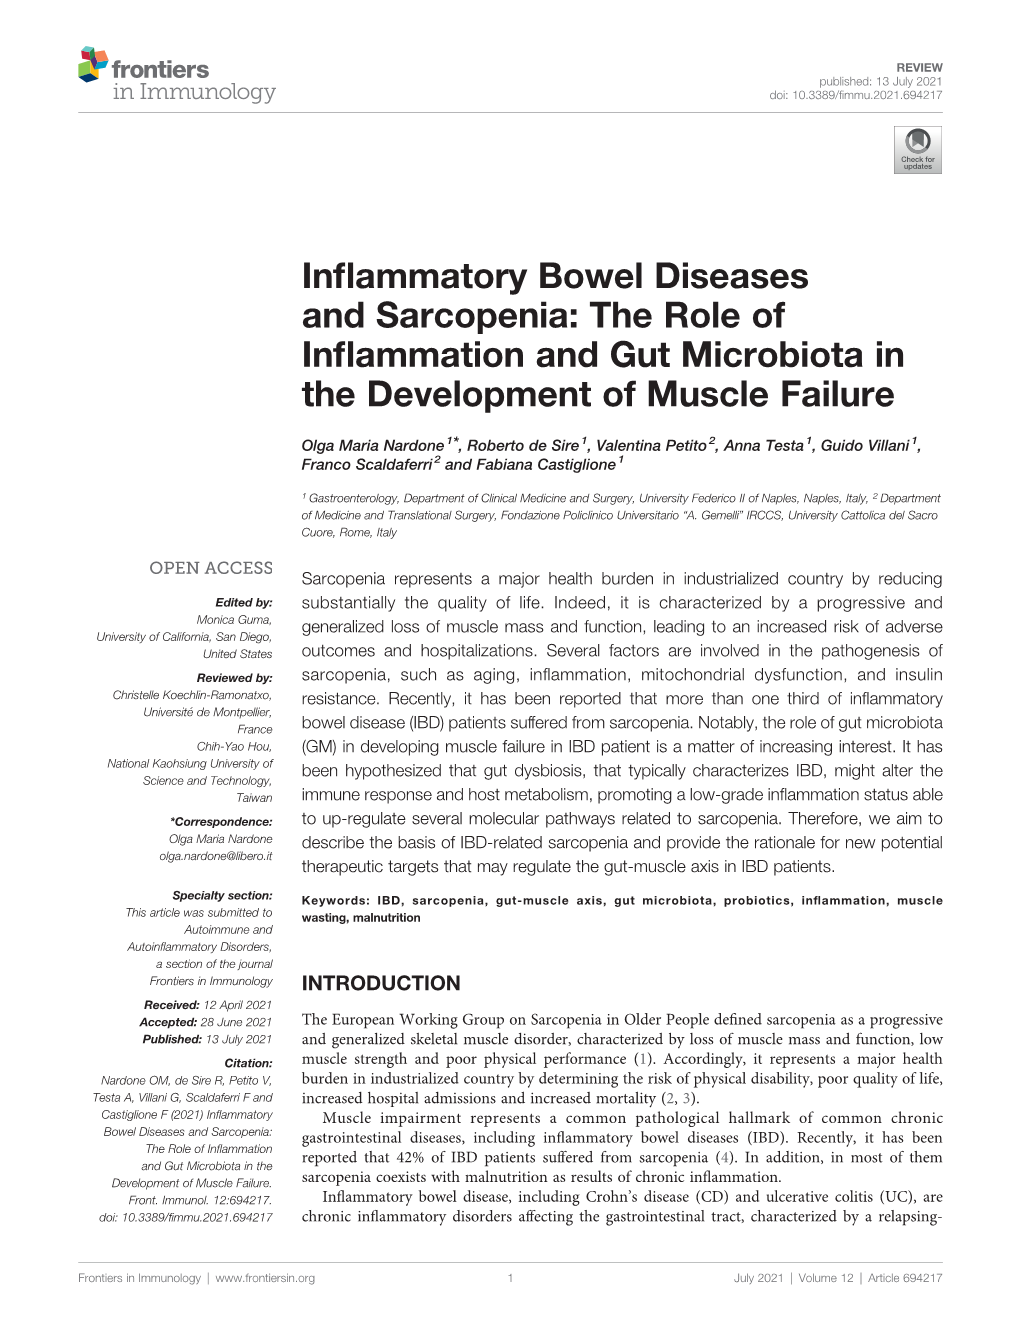 Inflammatory Bowel Diseases and Sarcopenia